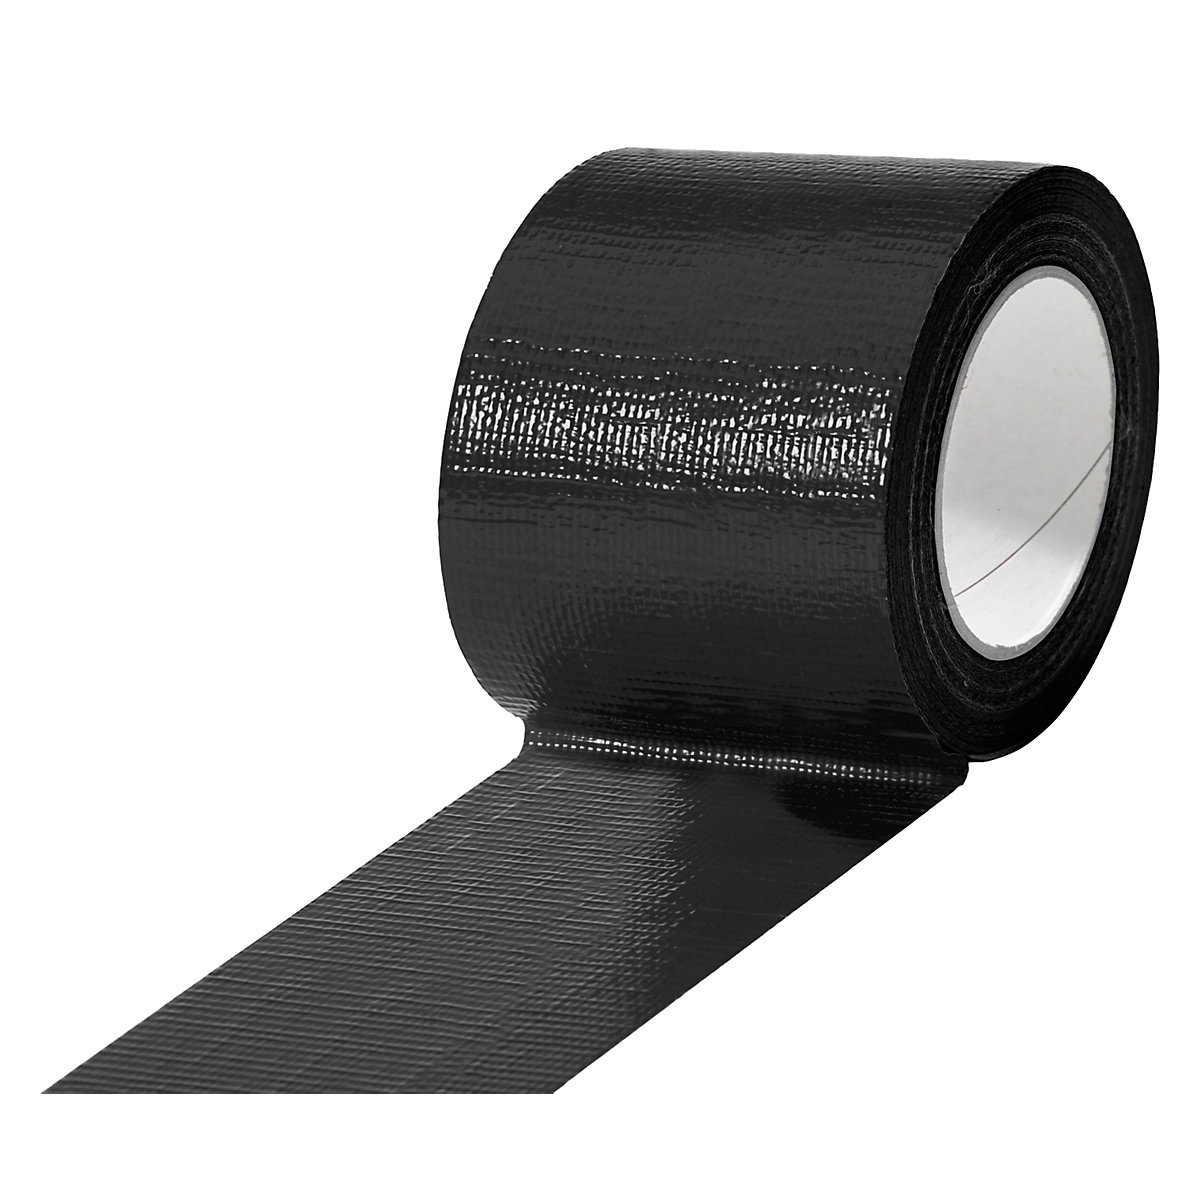 Tkaninová páska, v různých barvách, bal.j. 12 rolí, černá, šířka pásky 75 mm-20